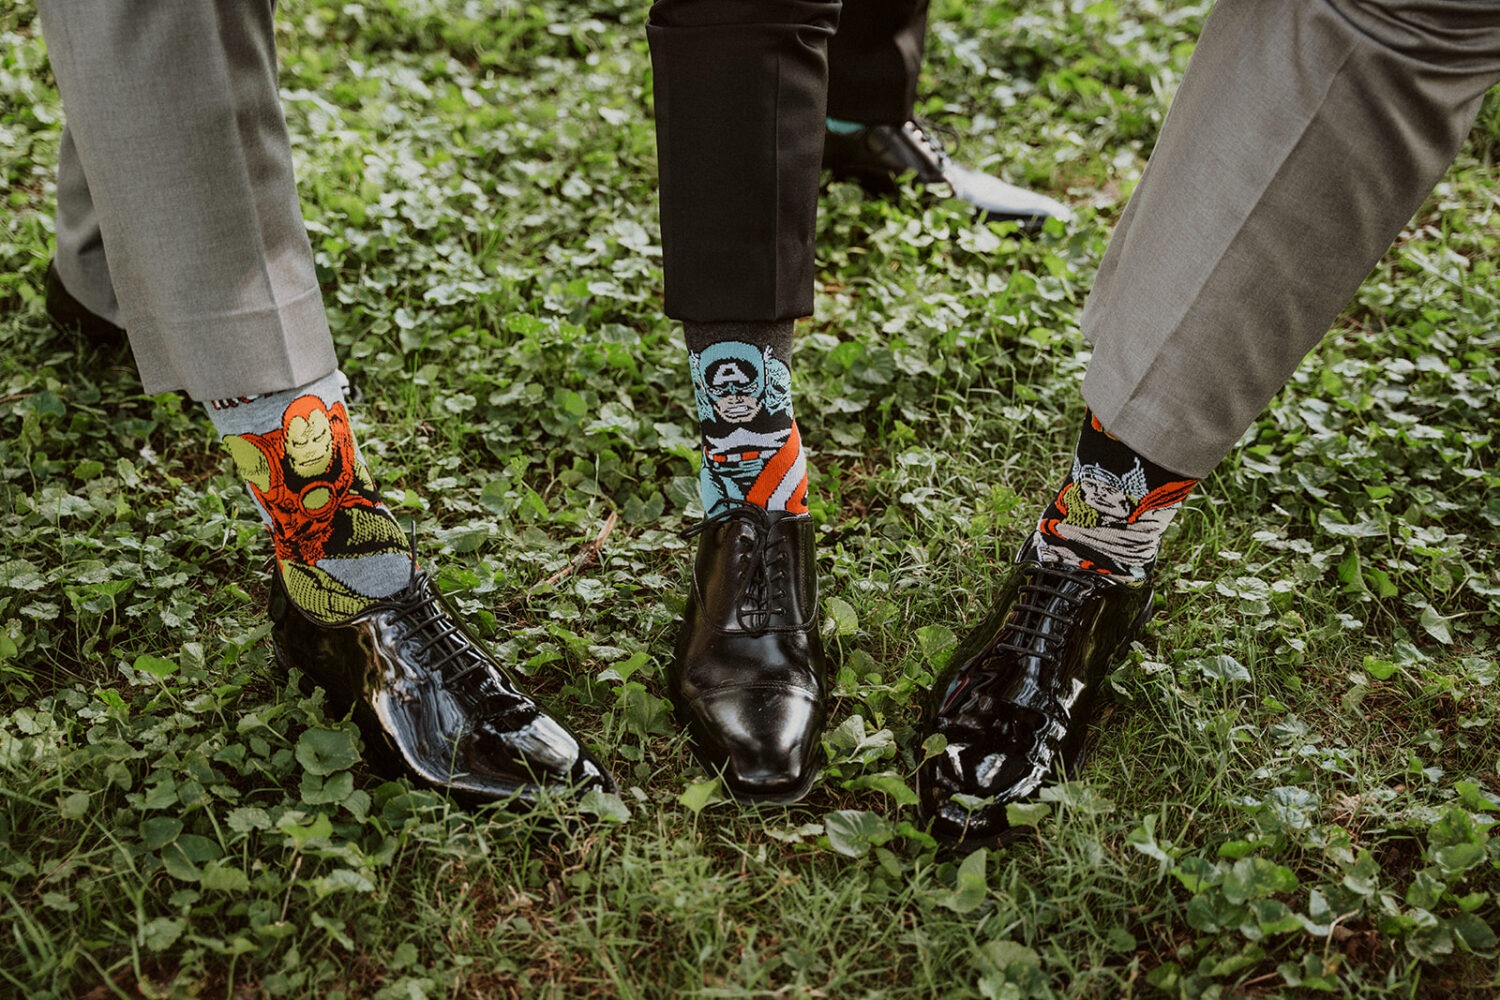 marvel socks on groomsmen as part of wedding style 